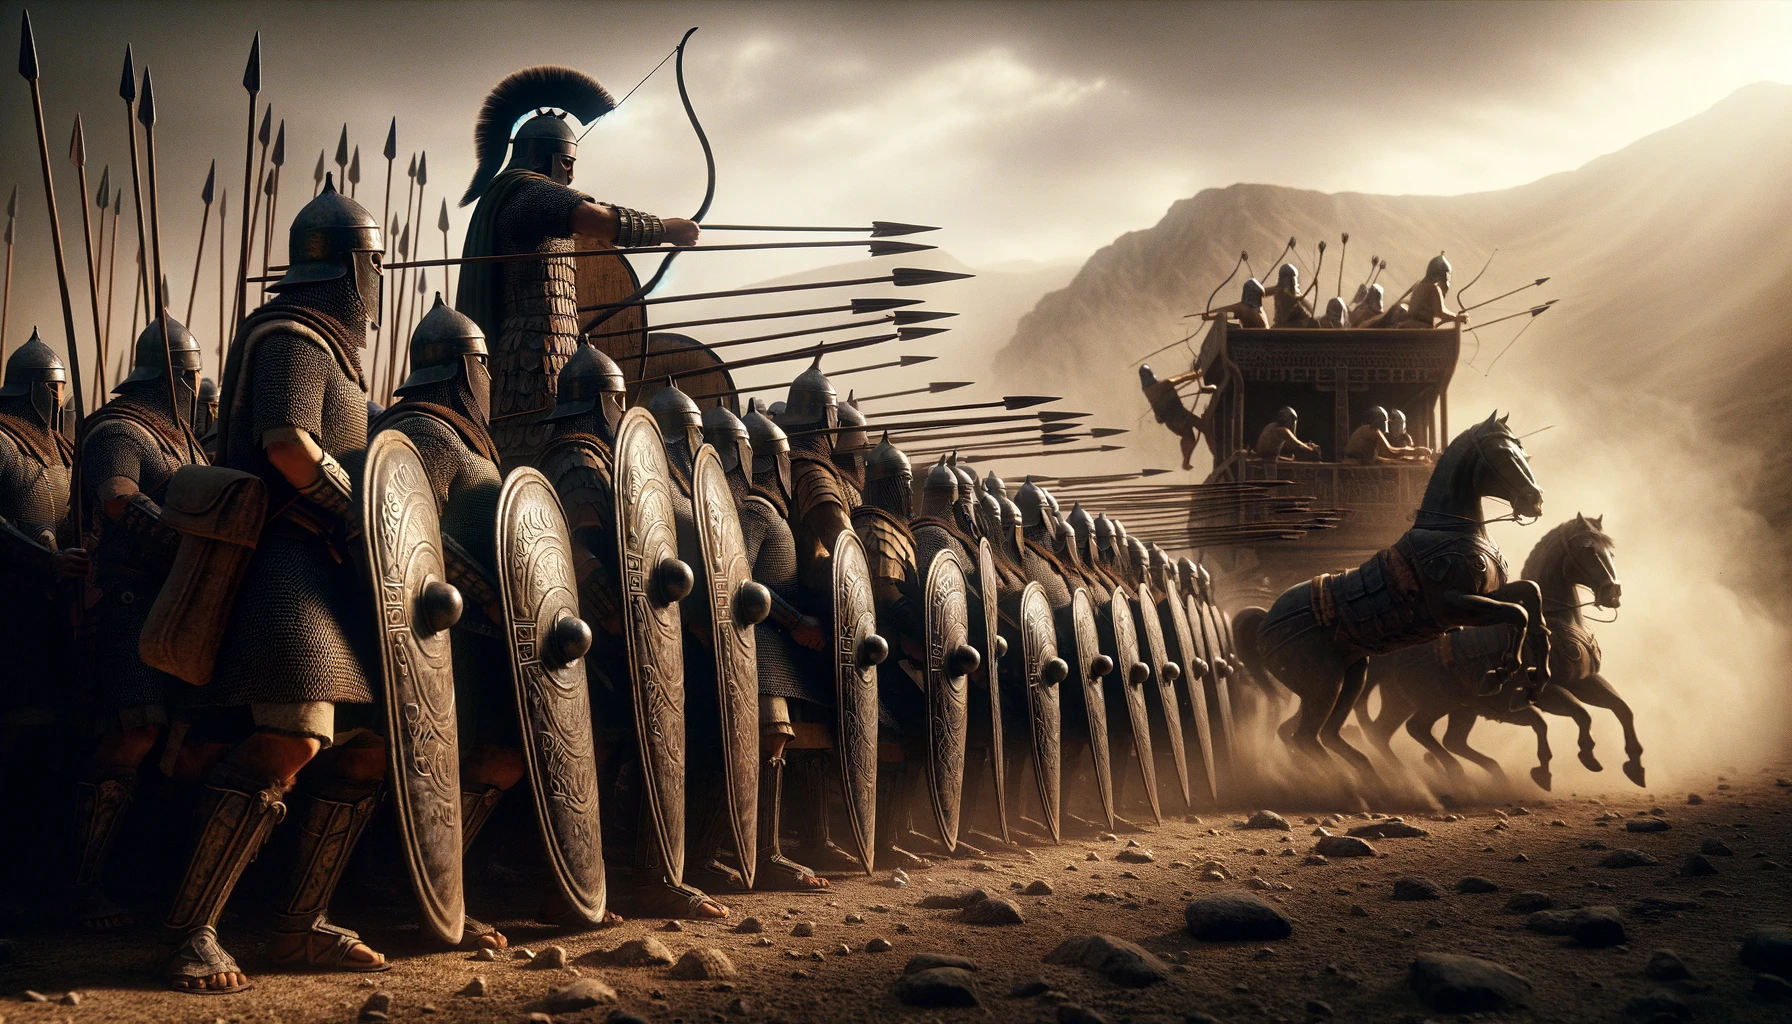 Battle Tactics and Strategies of Mesopotamian Armies